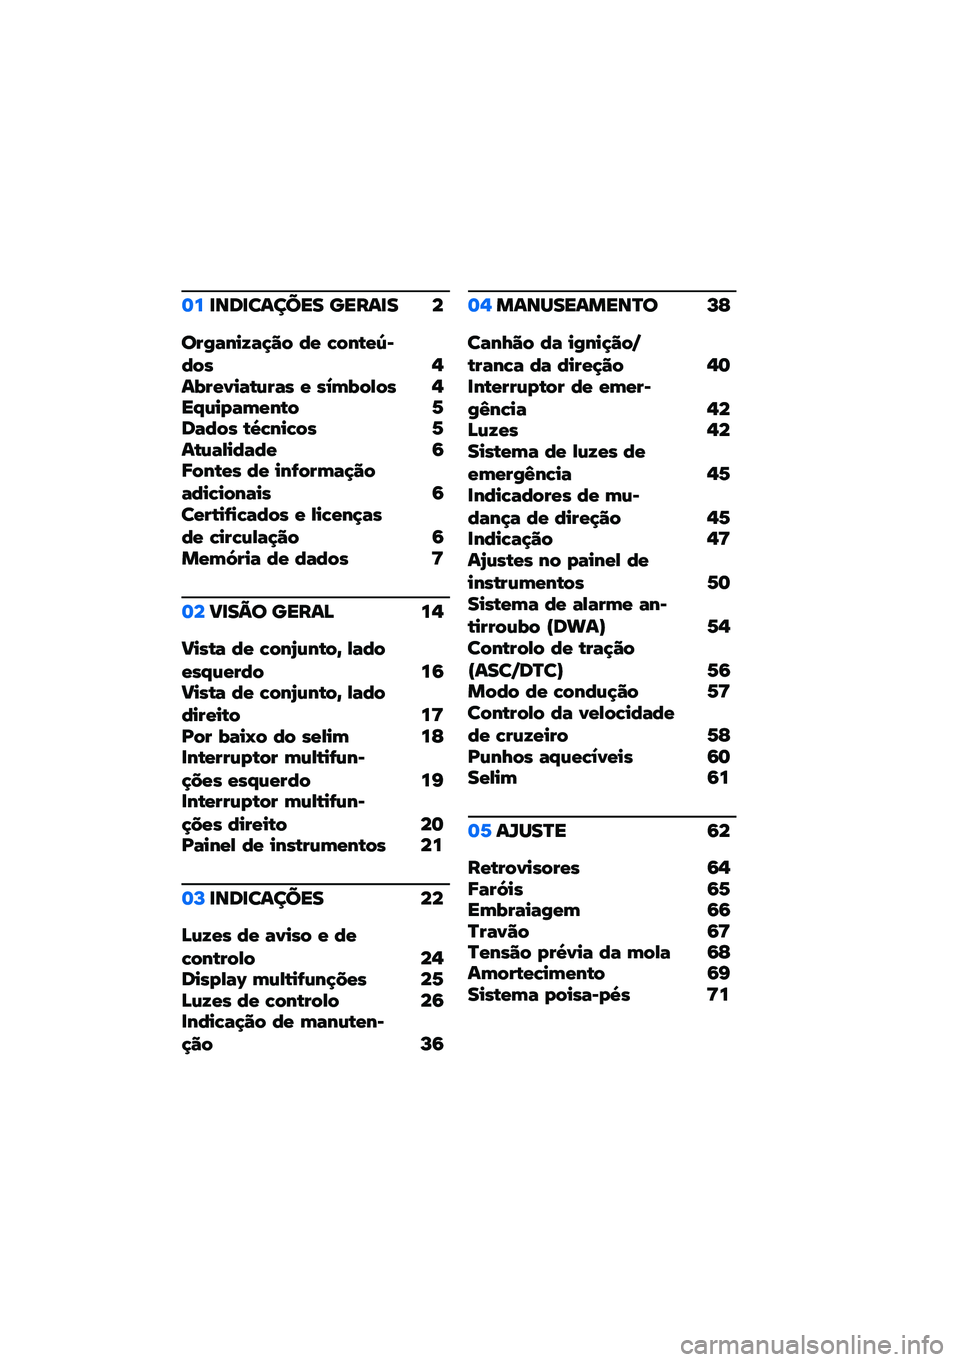 BMW MOTORRAD R NINE T URVAN G/S 2020  Manual do condutor (in Portuguese) �	��
���
������ �����
� �
��������� �!�" �#�$ �%�"��&�$��*�#�"�+ �,��.��$�/���&�(���+ �$ �+�0�2�.�"�3�"�+ �,��4�(��5��2�$��&�" �6���#�"�+ �&�8�%���%�"�+ �6��&�(